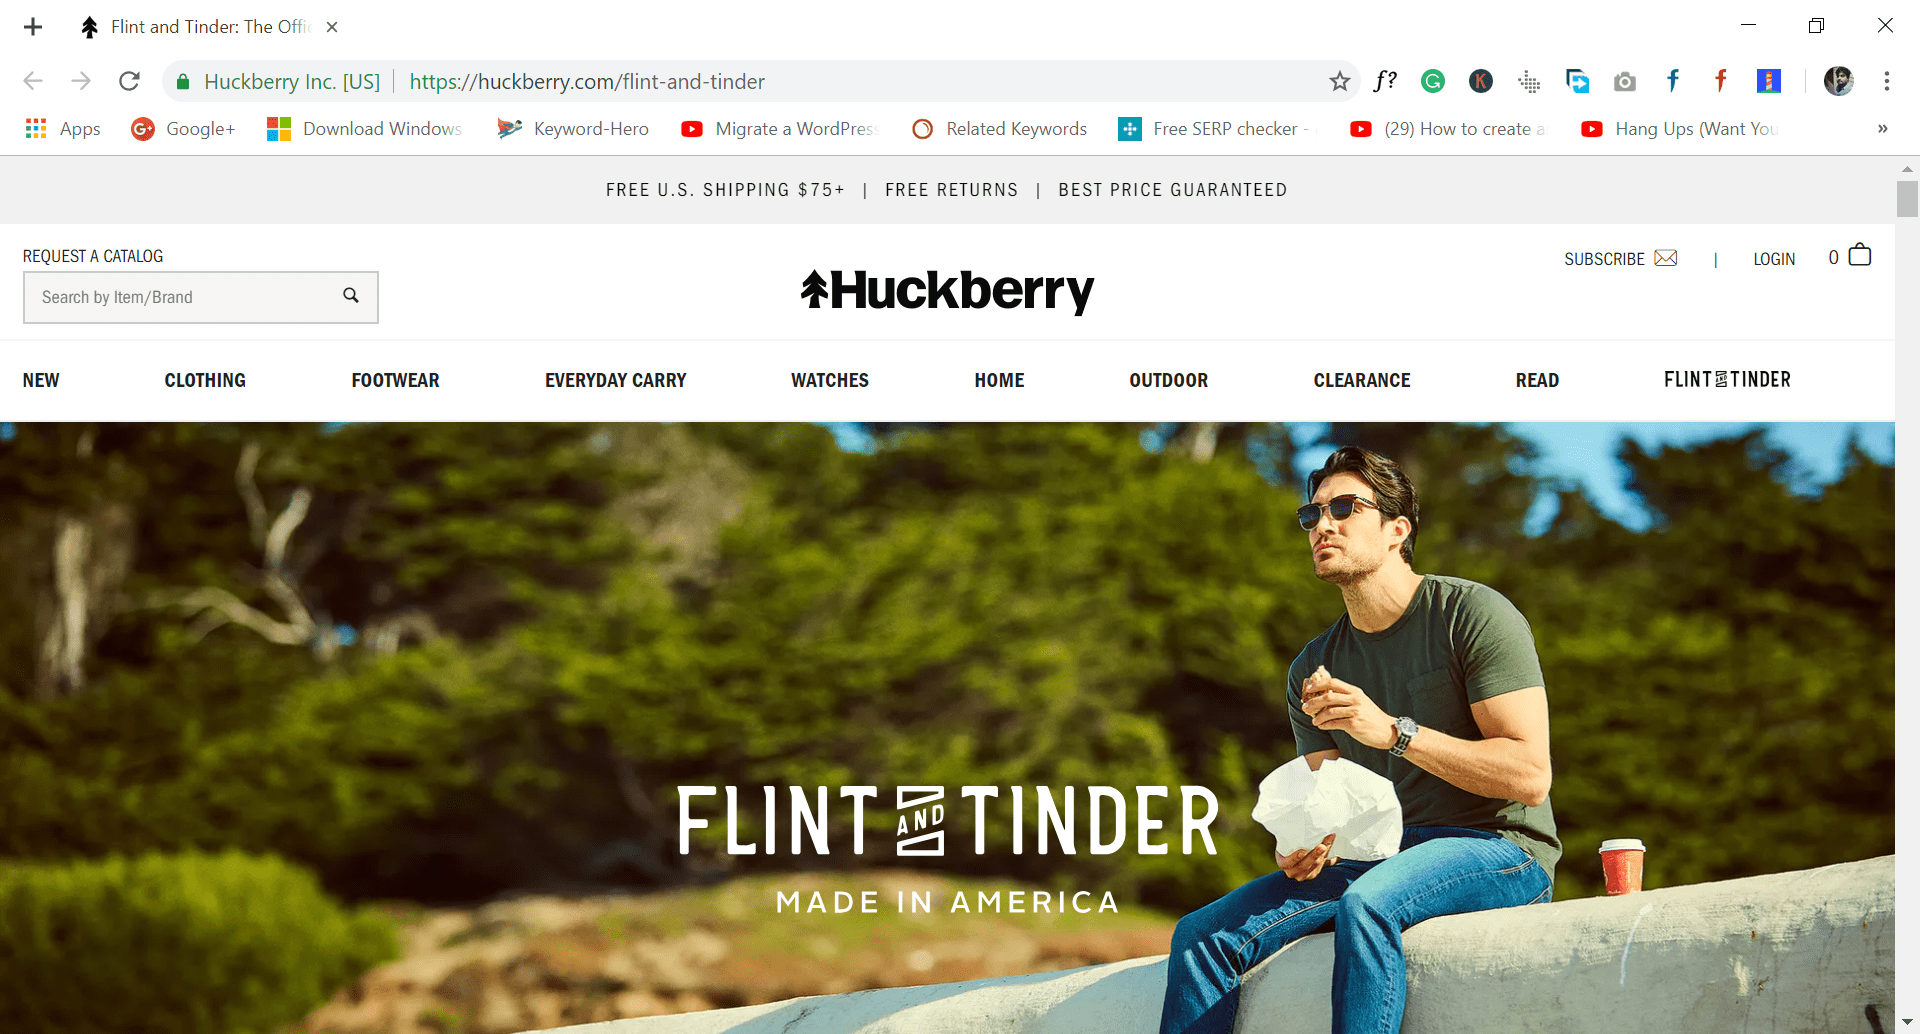 huckberry - flint and tinder - site like wish.com